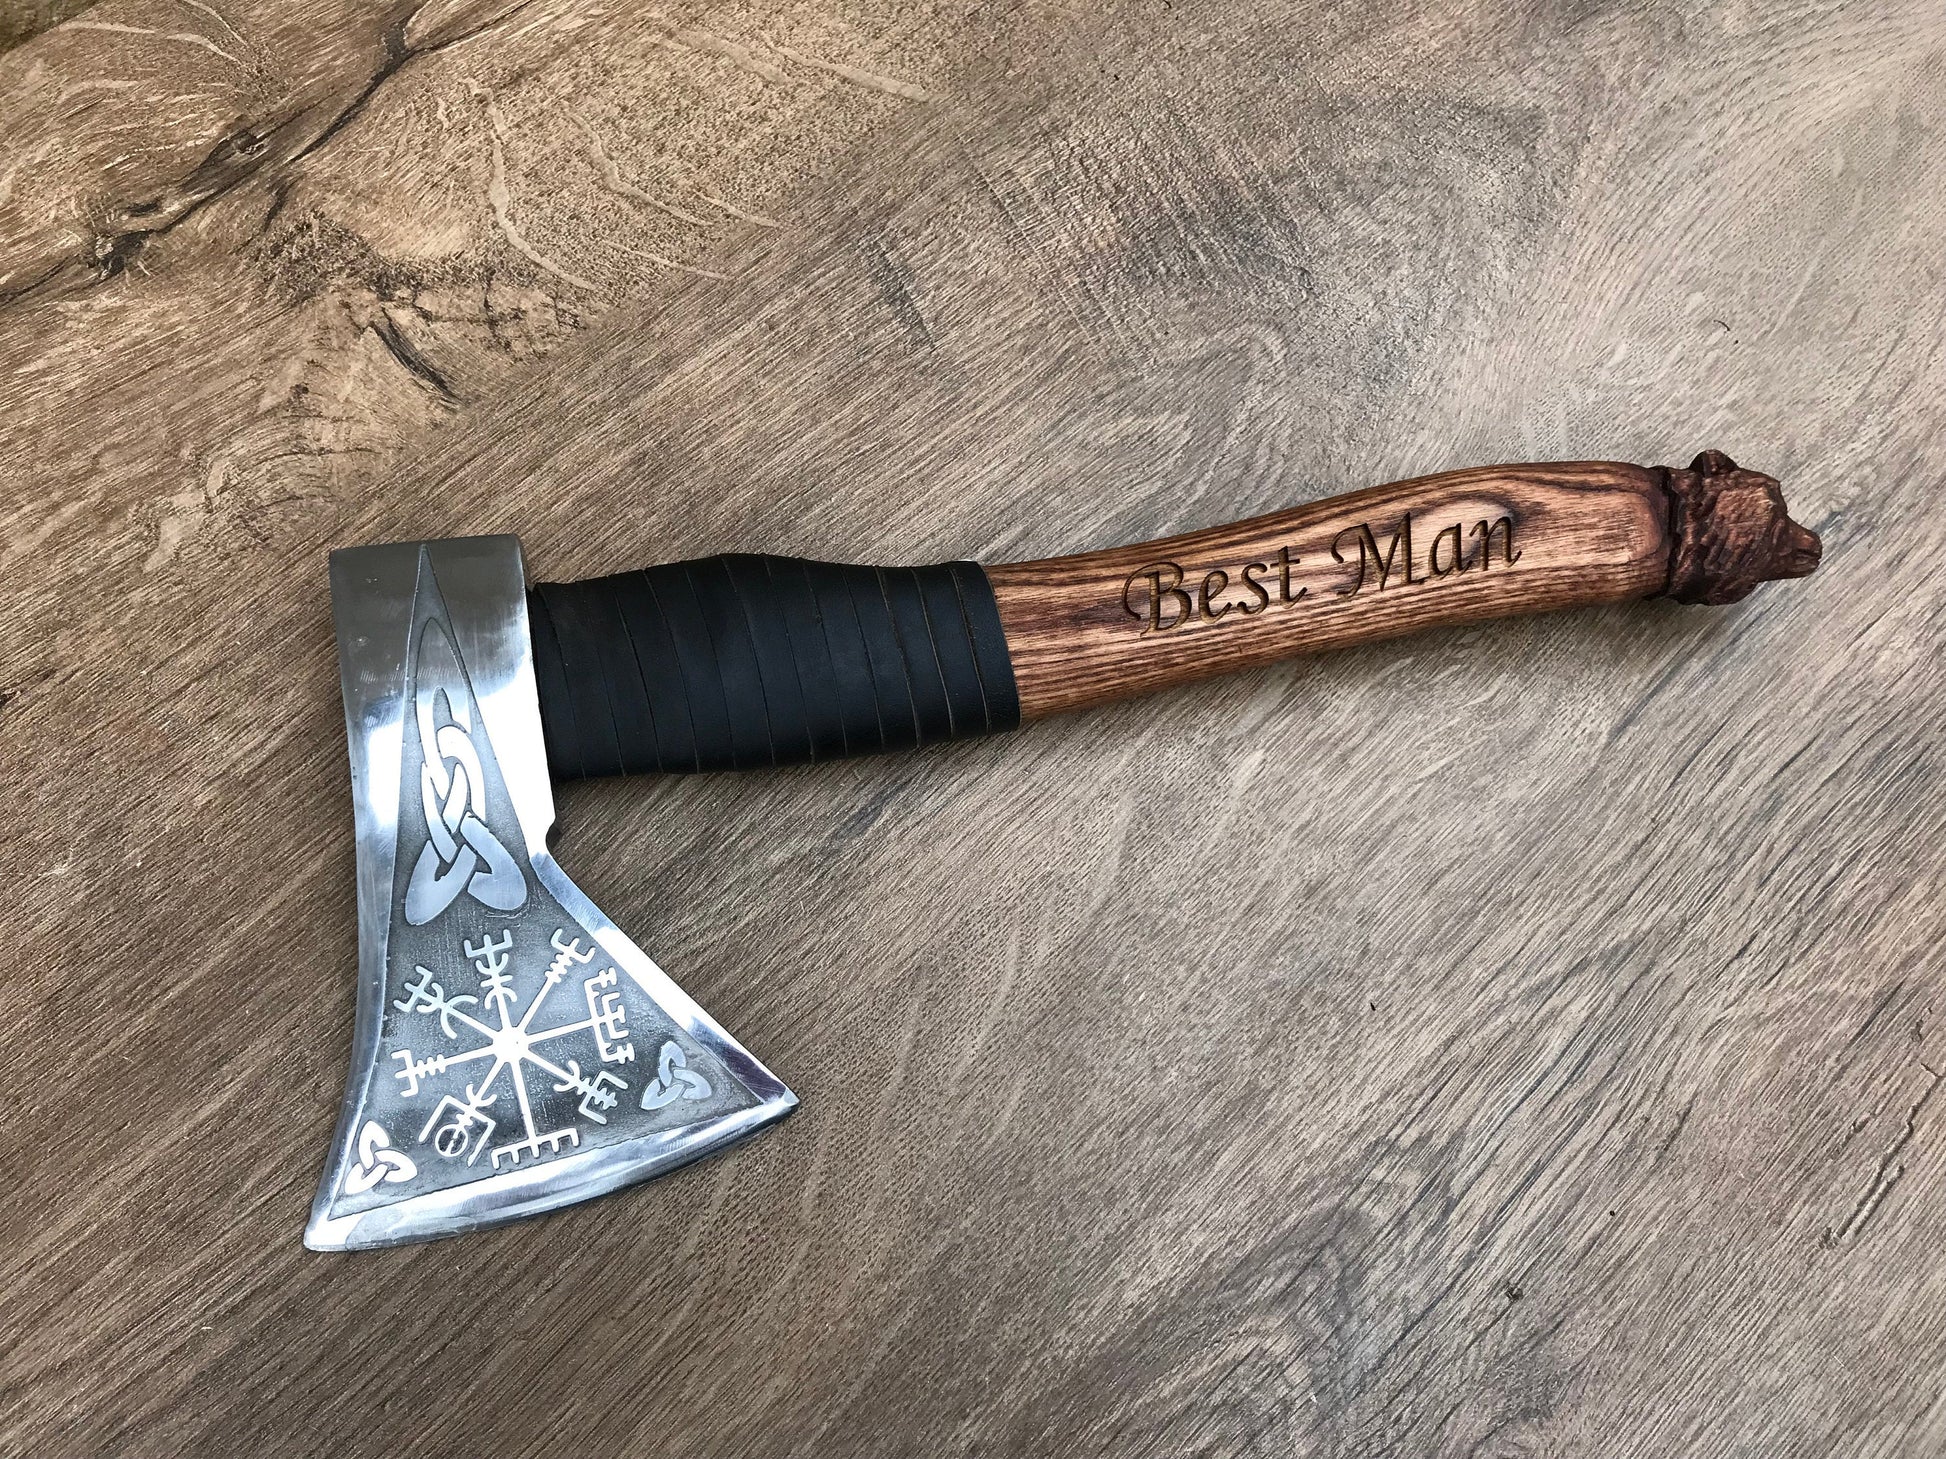 Wedding axe, viking axe, mens gifts, vegvisir, carved wolf, groom gift, viking compass, wedding gift, groomsman gift, best man gift, axe